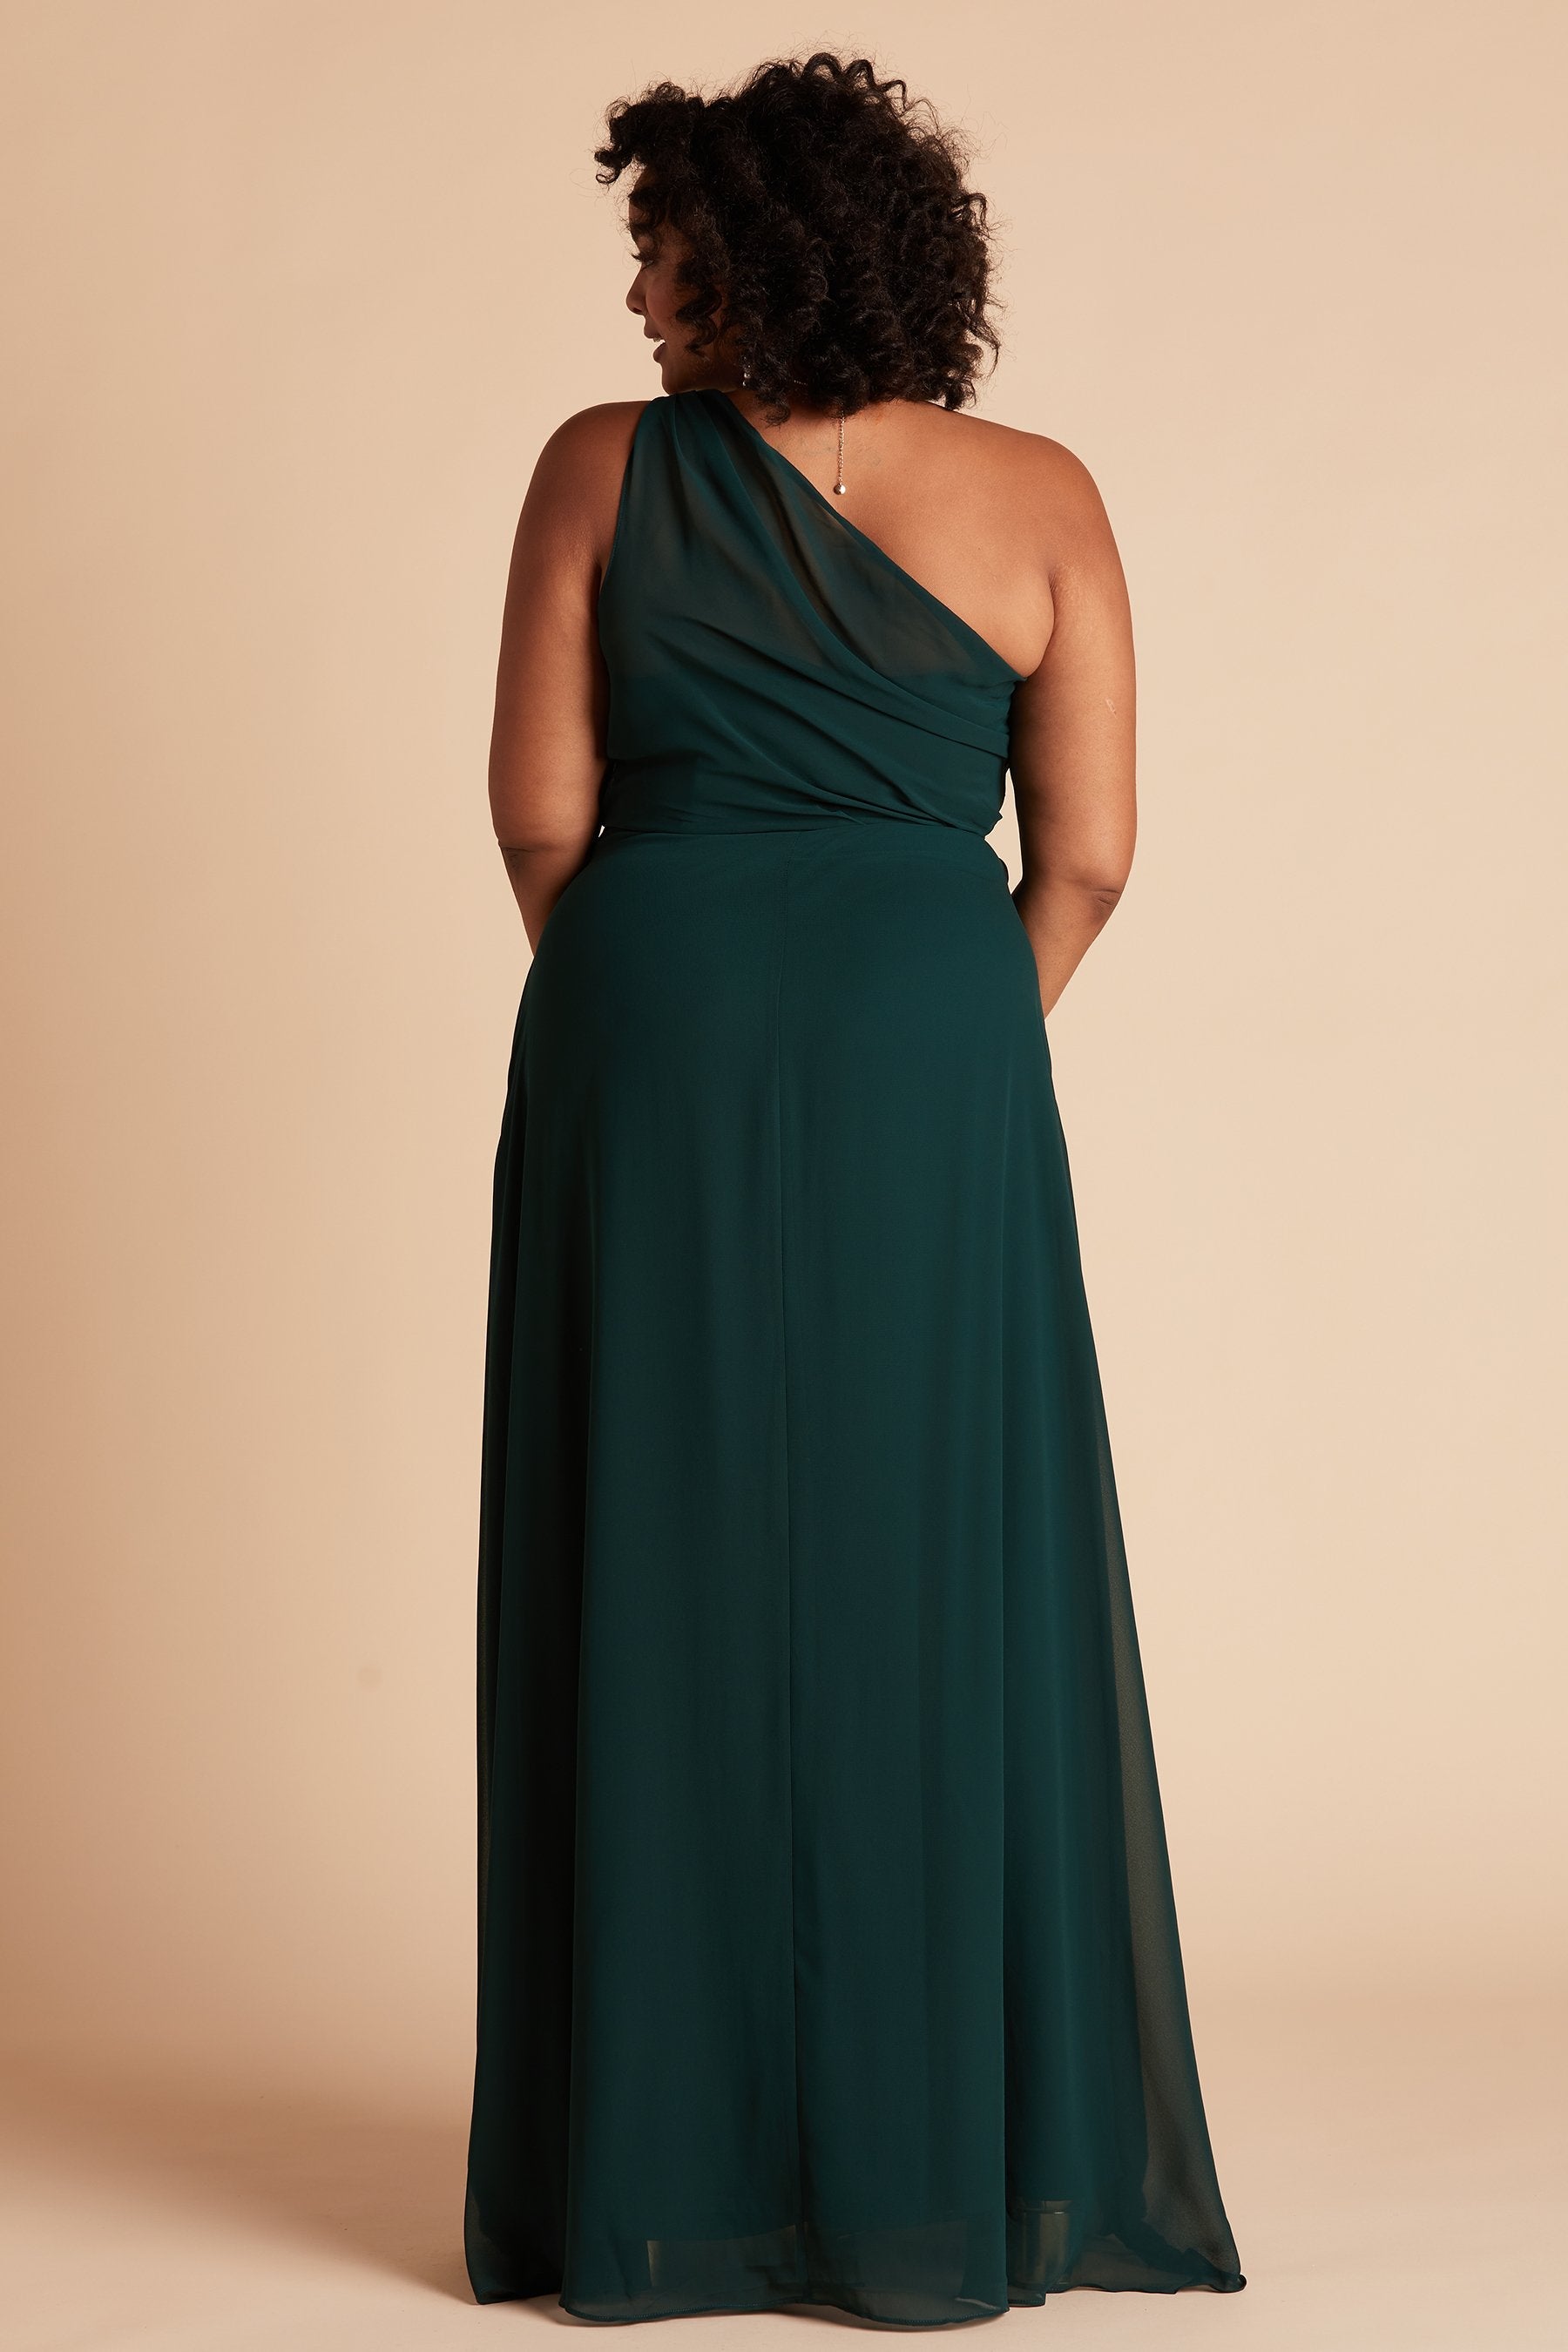 Kira plus size bridesmaid dress in emerald chiffon by Birdy Grey, back view